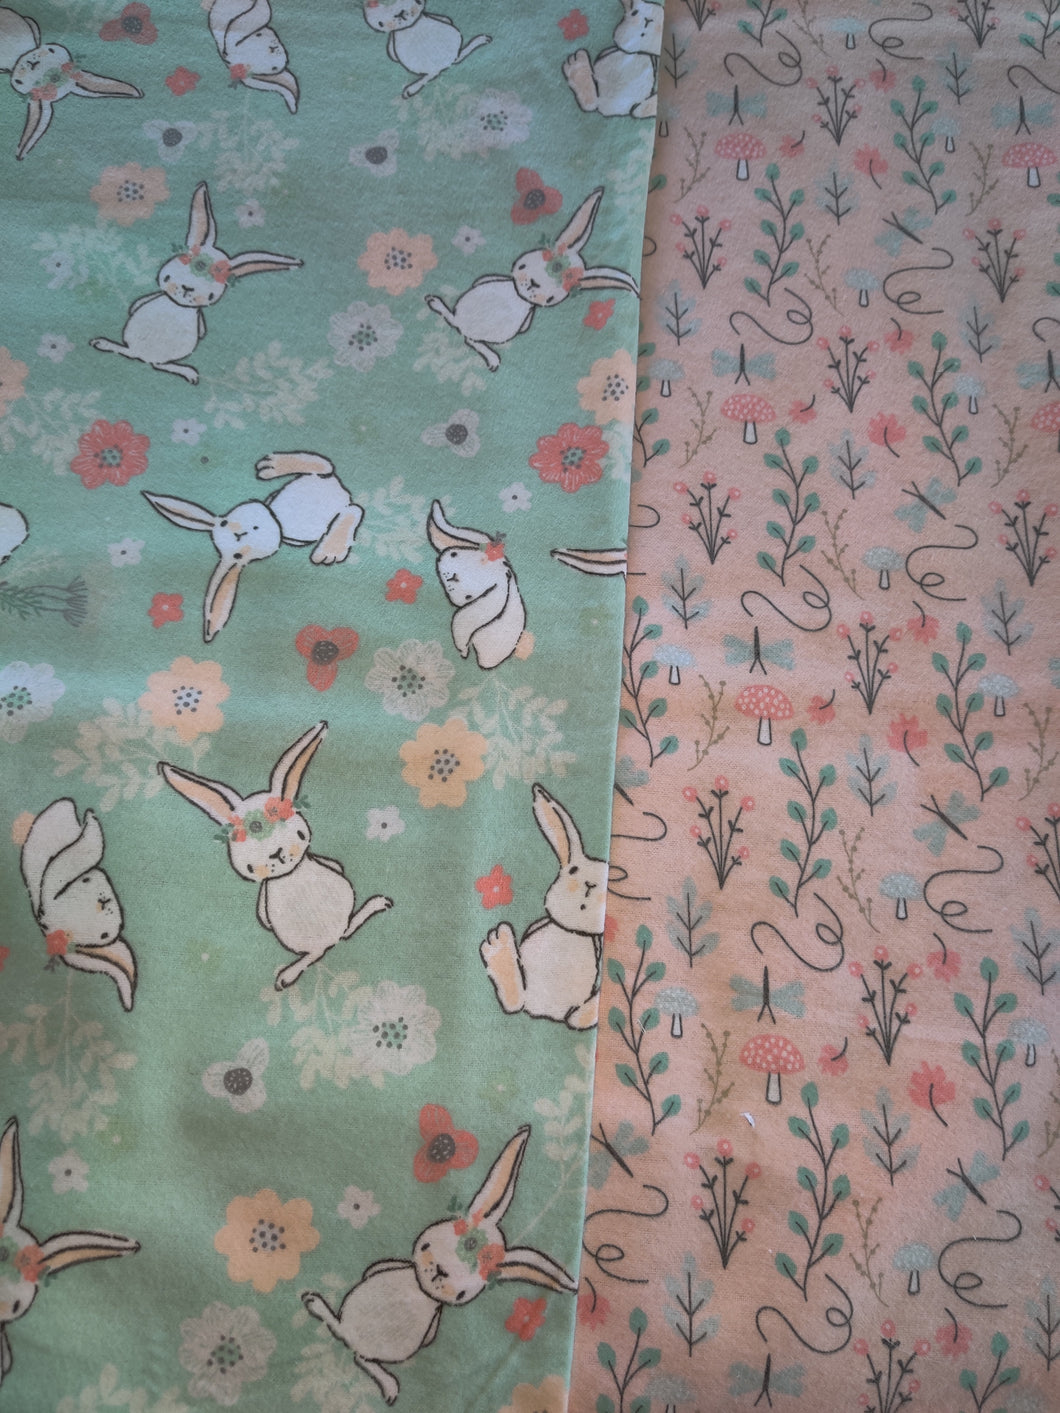 Receiving Blanket - Bunnies, Mint Green Flannel::Flowers & Mushrooms Salmon Pink Flannel